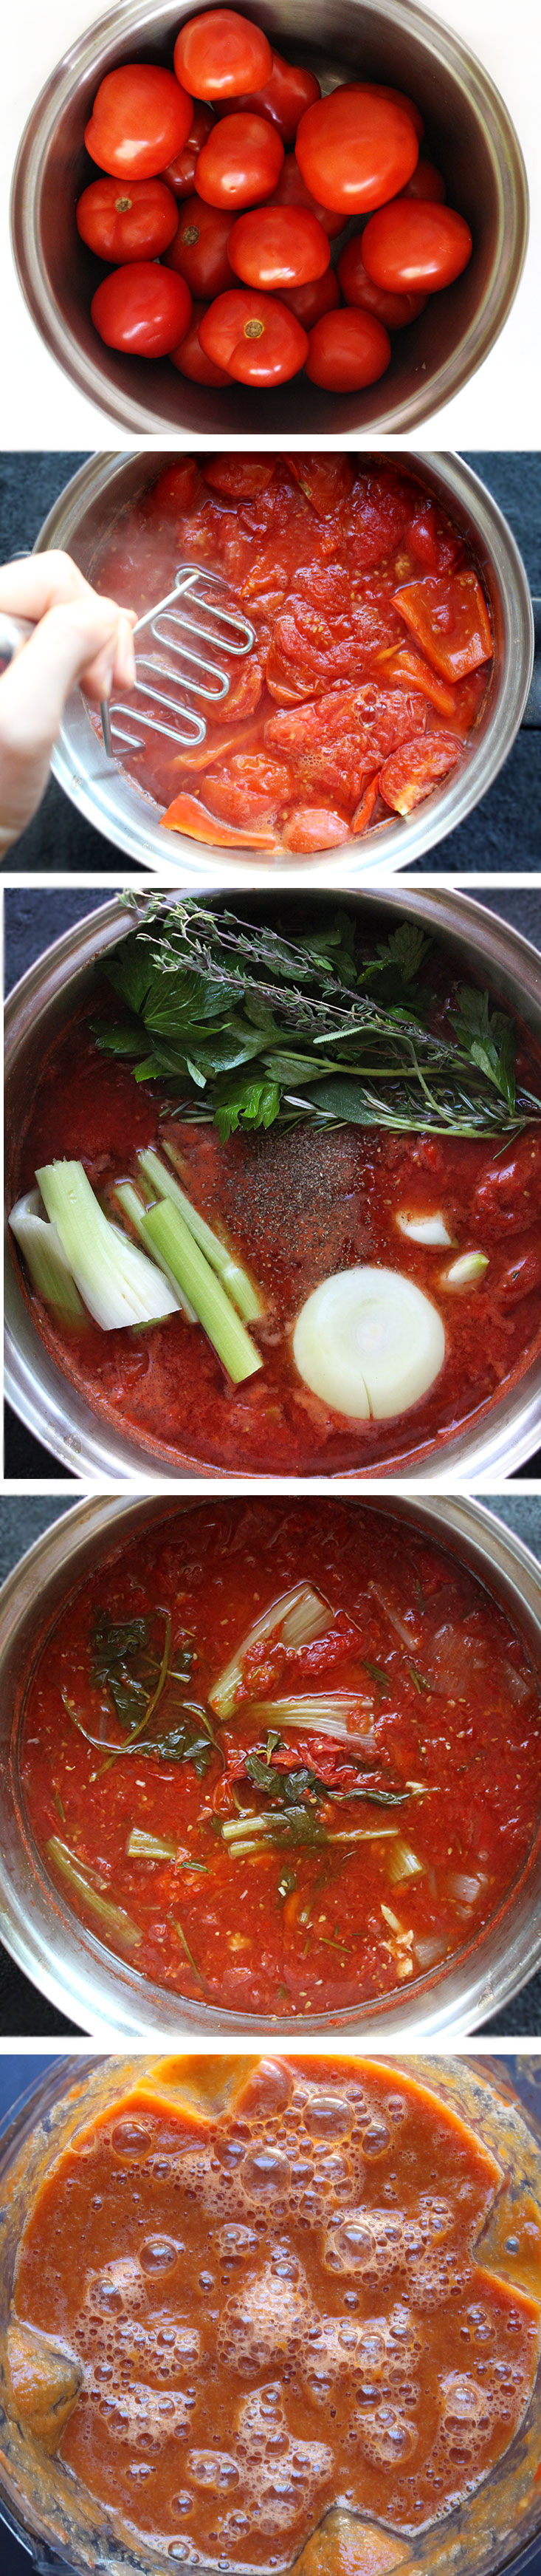 How to make homemade tomato soup